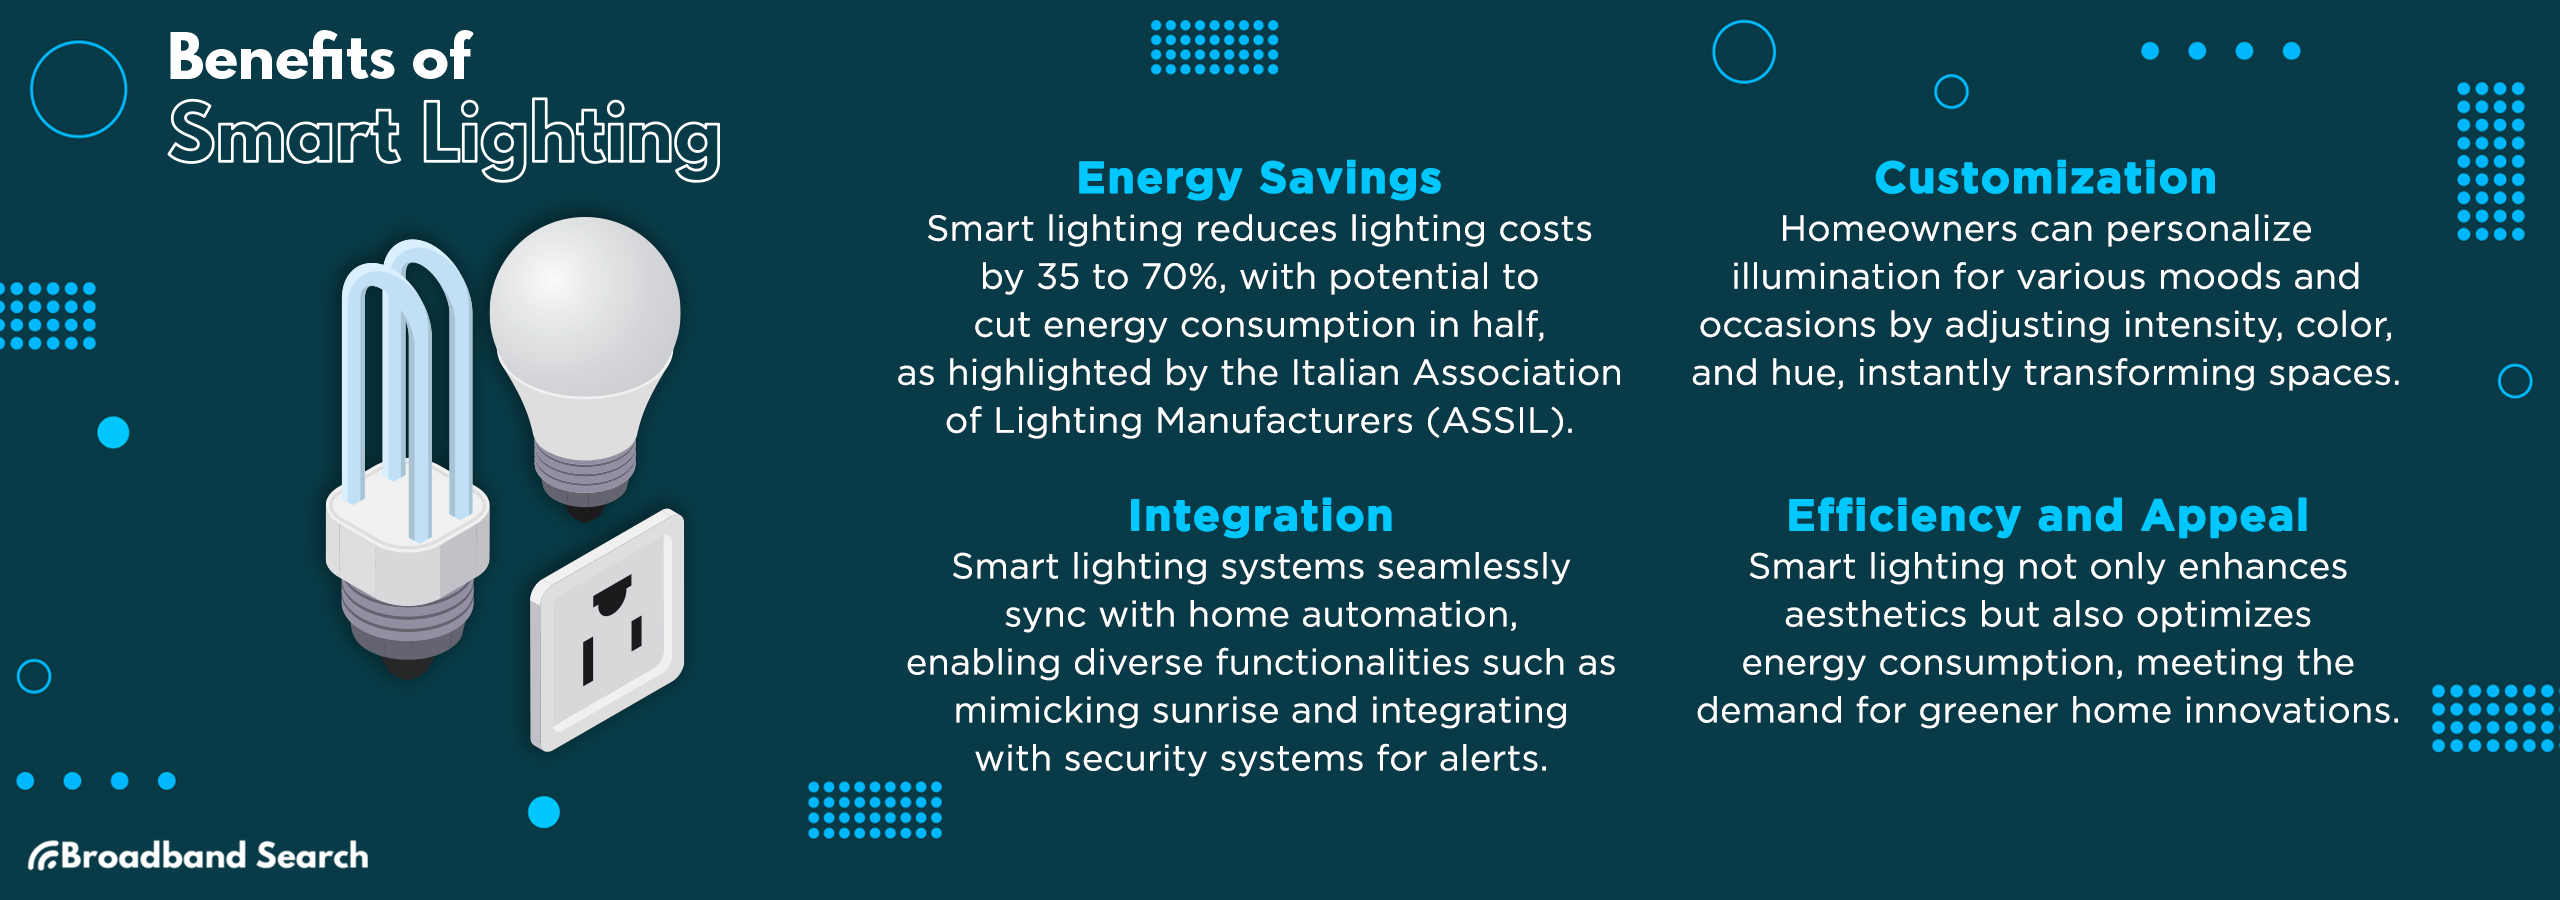 four benefits of using Smart lighting